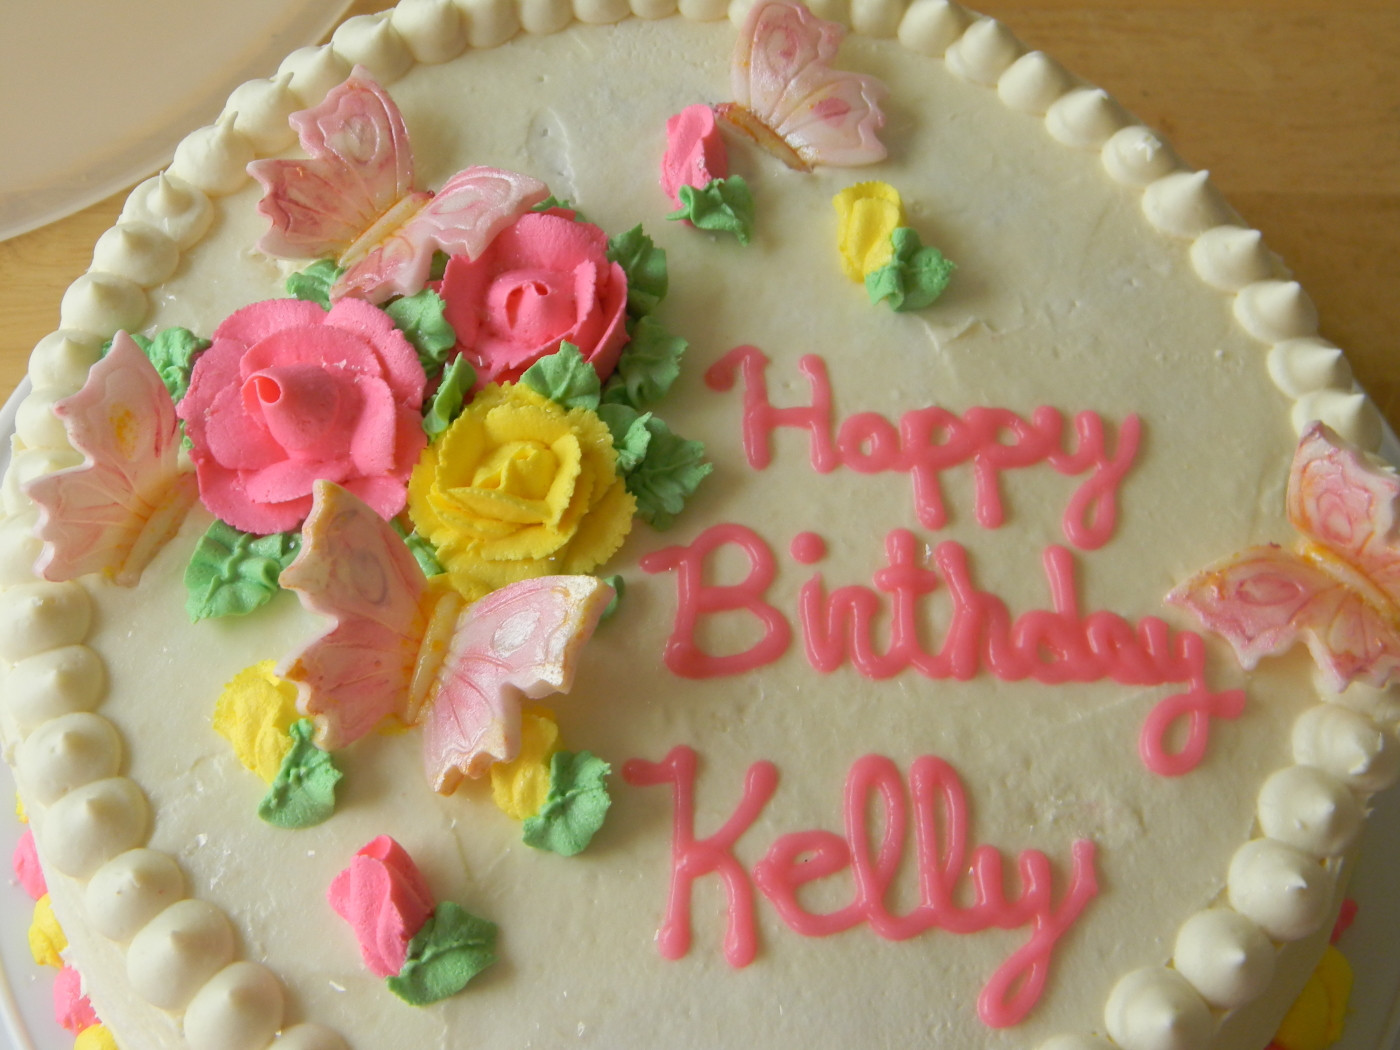 Happy Birthday Kelly Cake
 Pin Peace Sign Invites Printable Cake on Pinterest